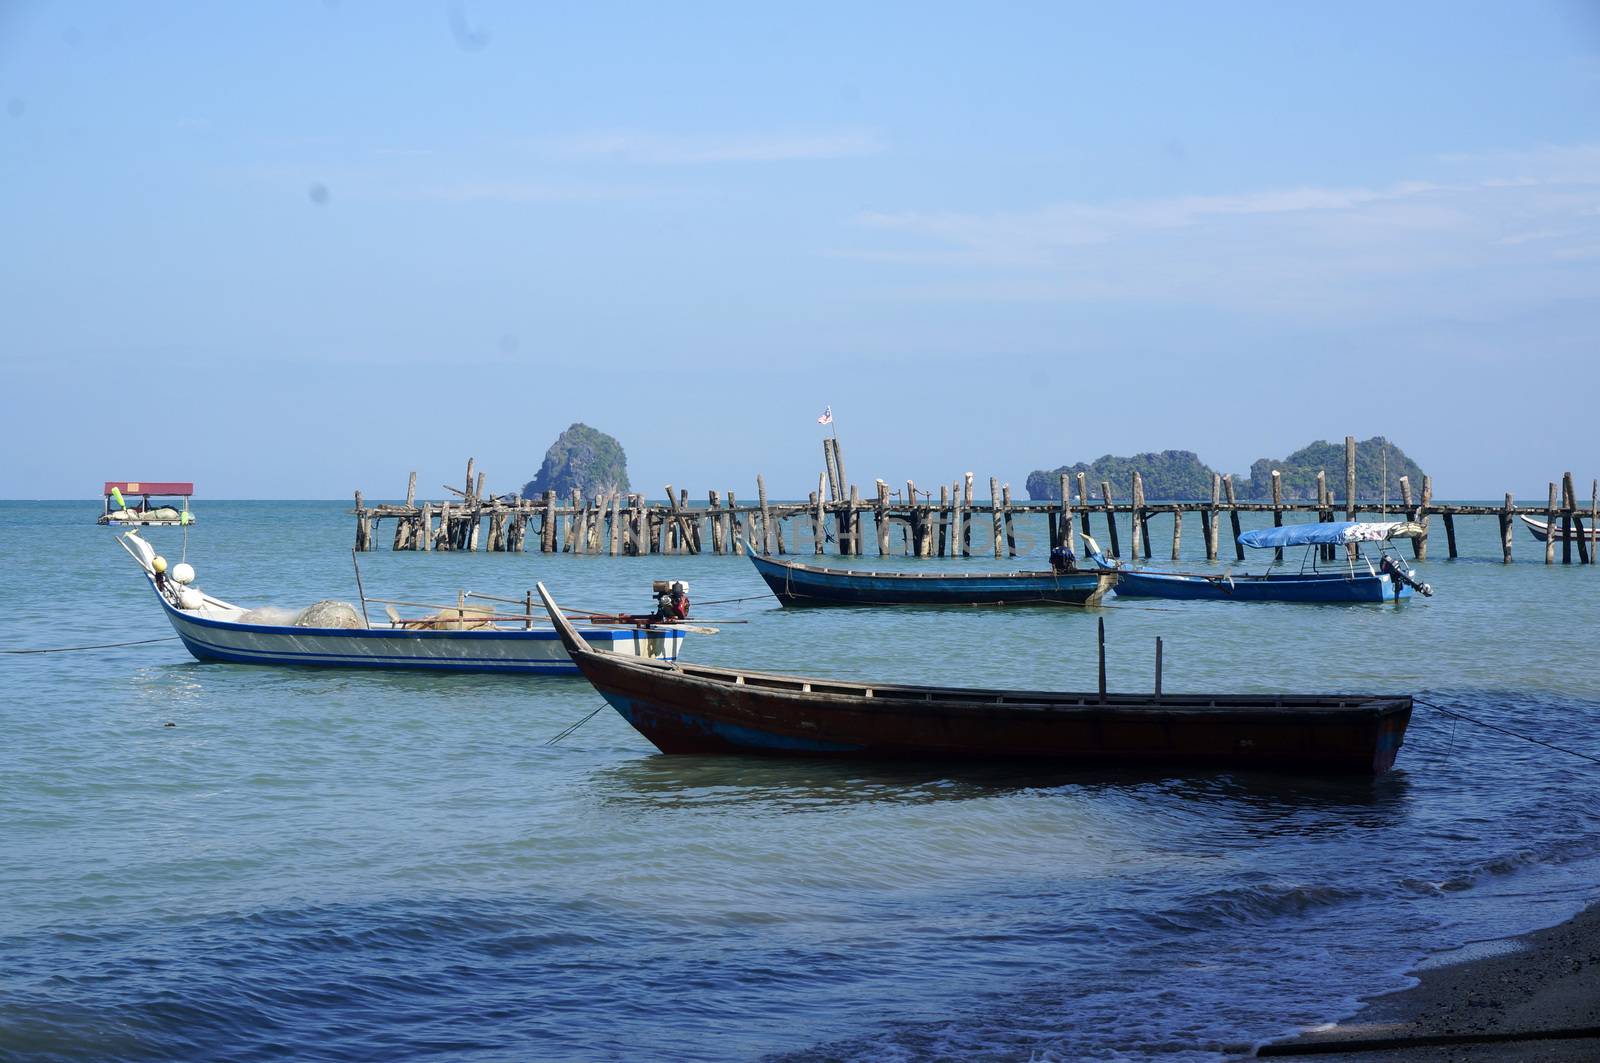 Old fishing boats are coast of Malaysia, Langkawi